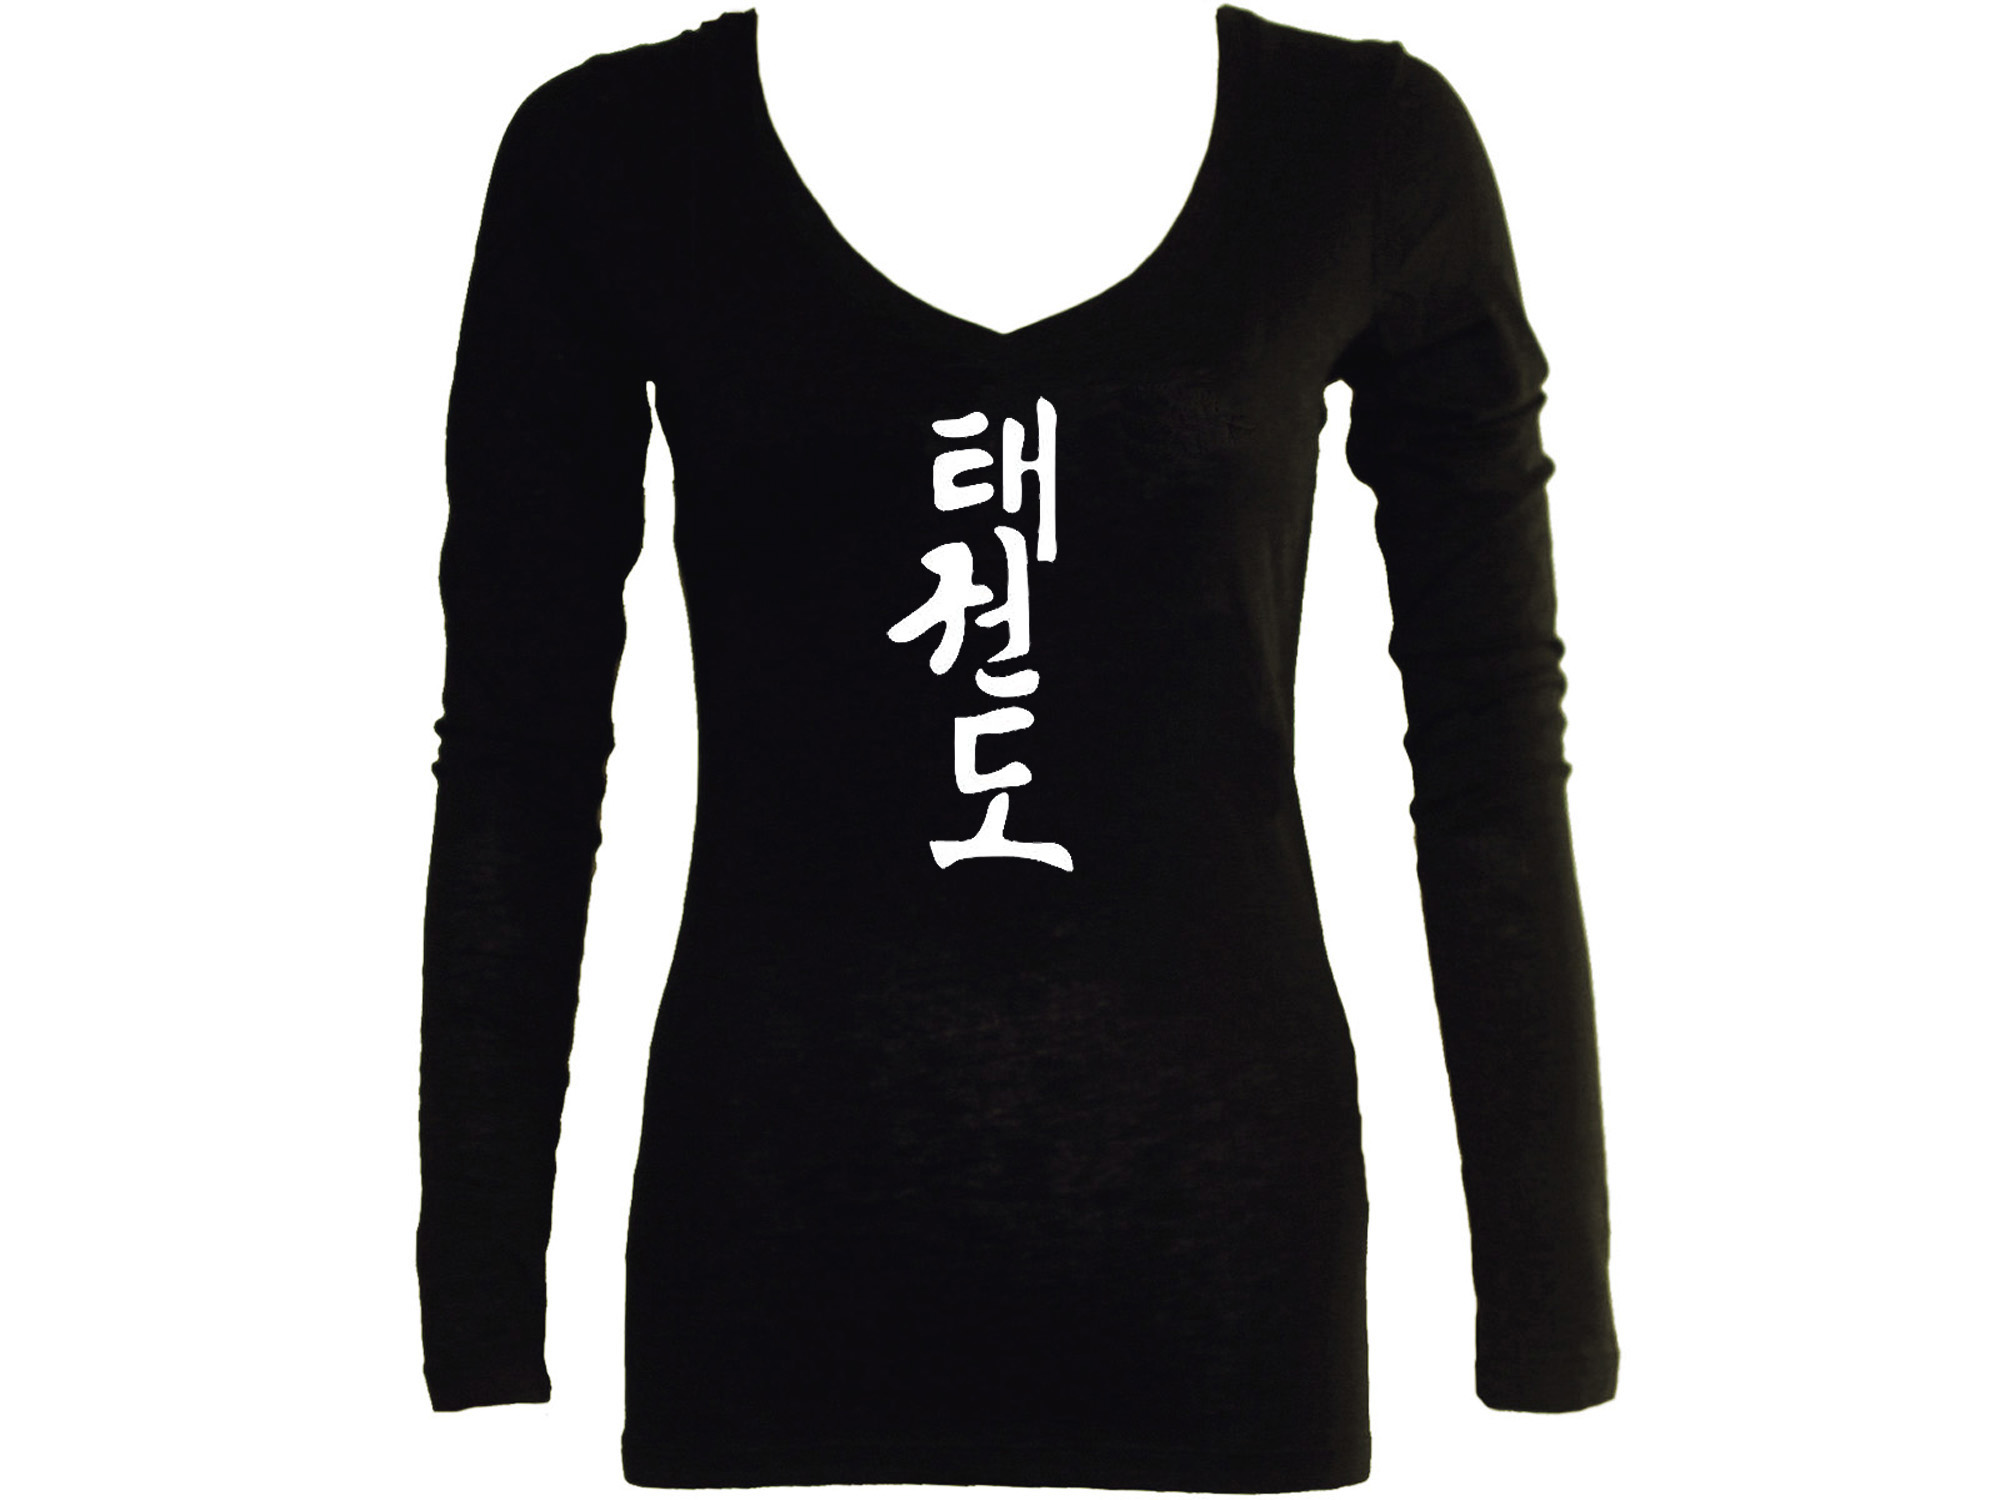 Taekwondo Tae kwon do MMA women sleeved t-shirt